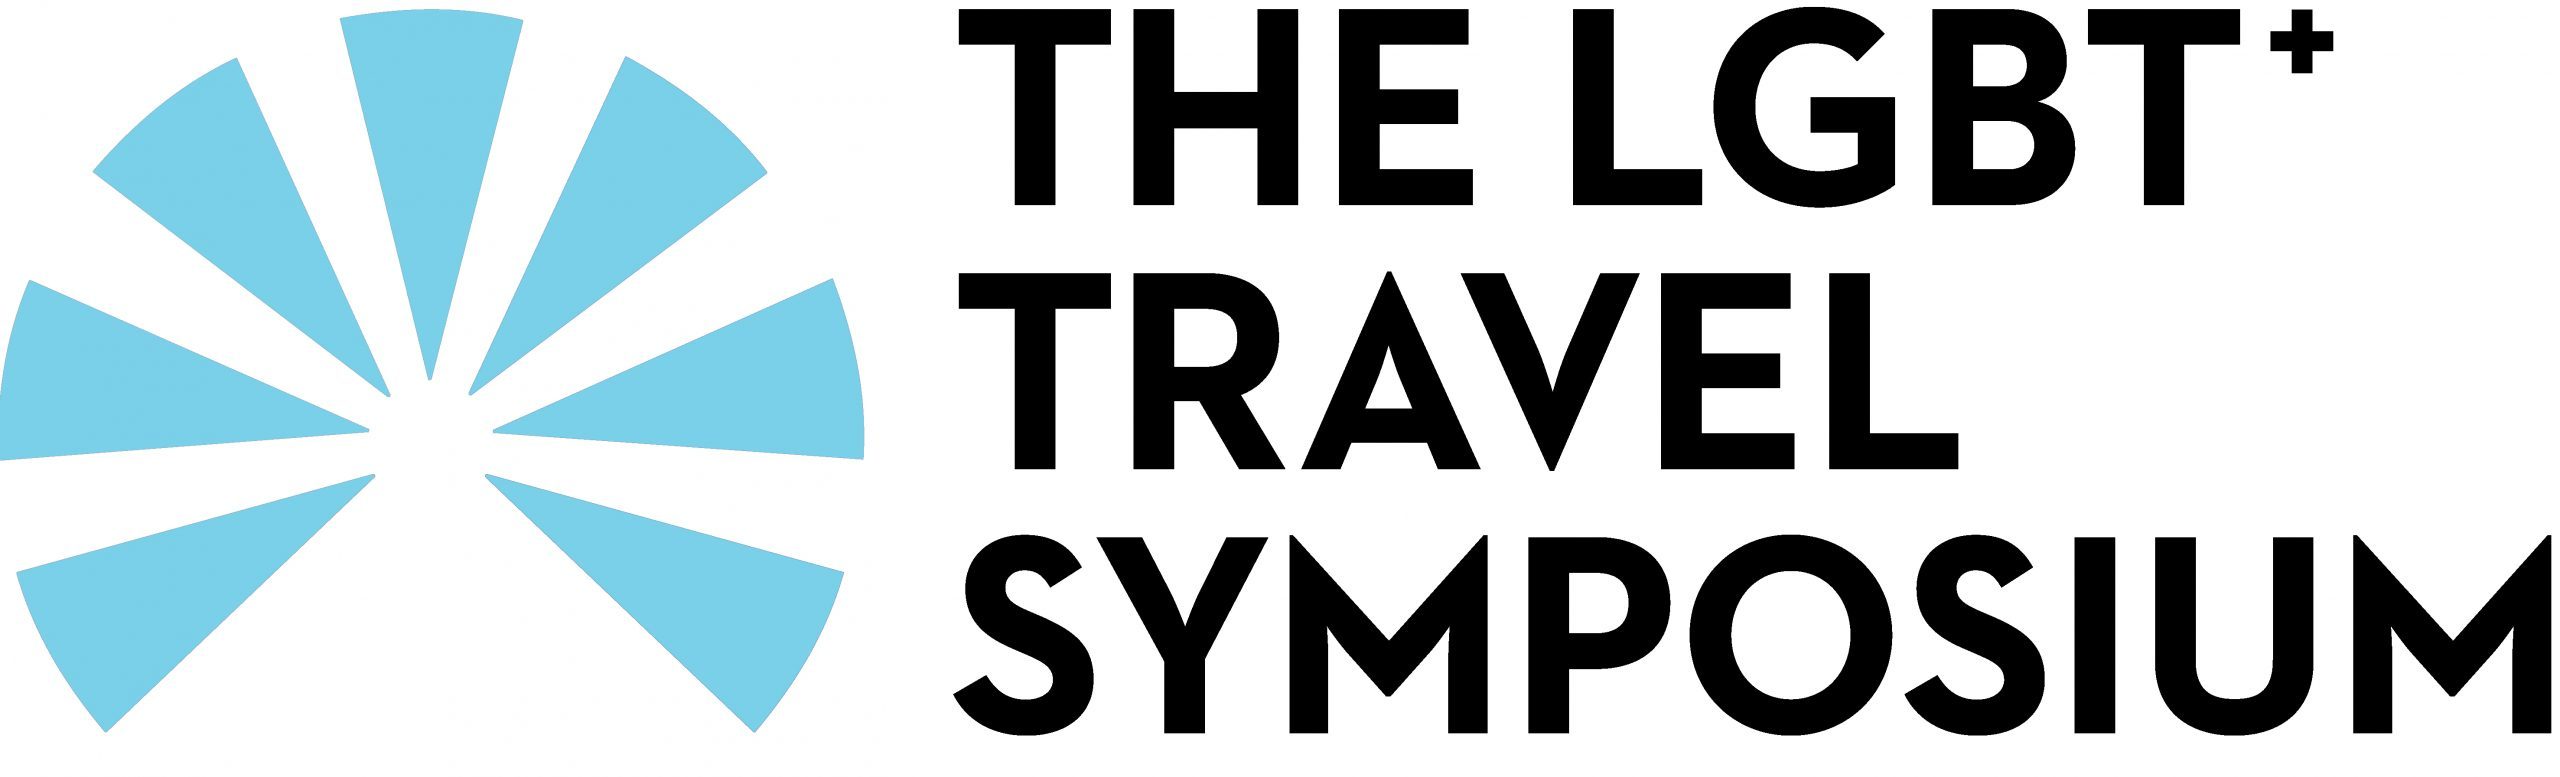 The LGBT+ Travel Symposium